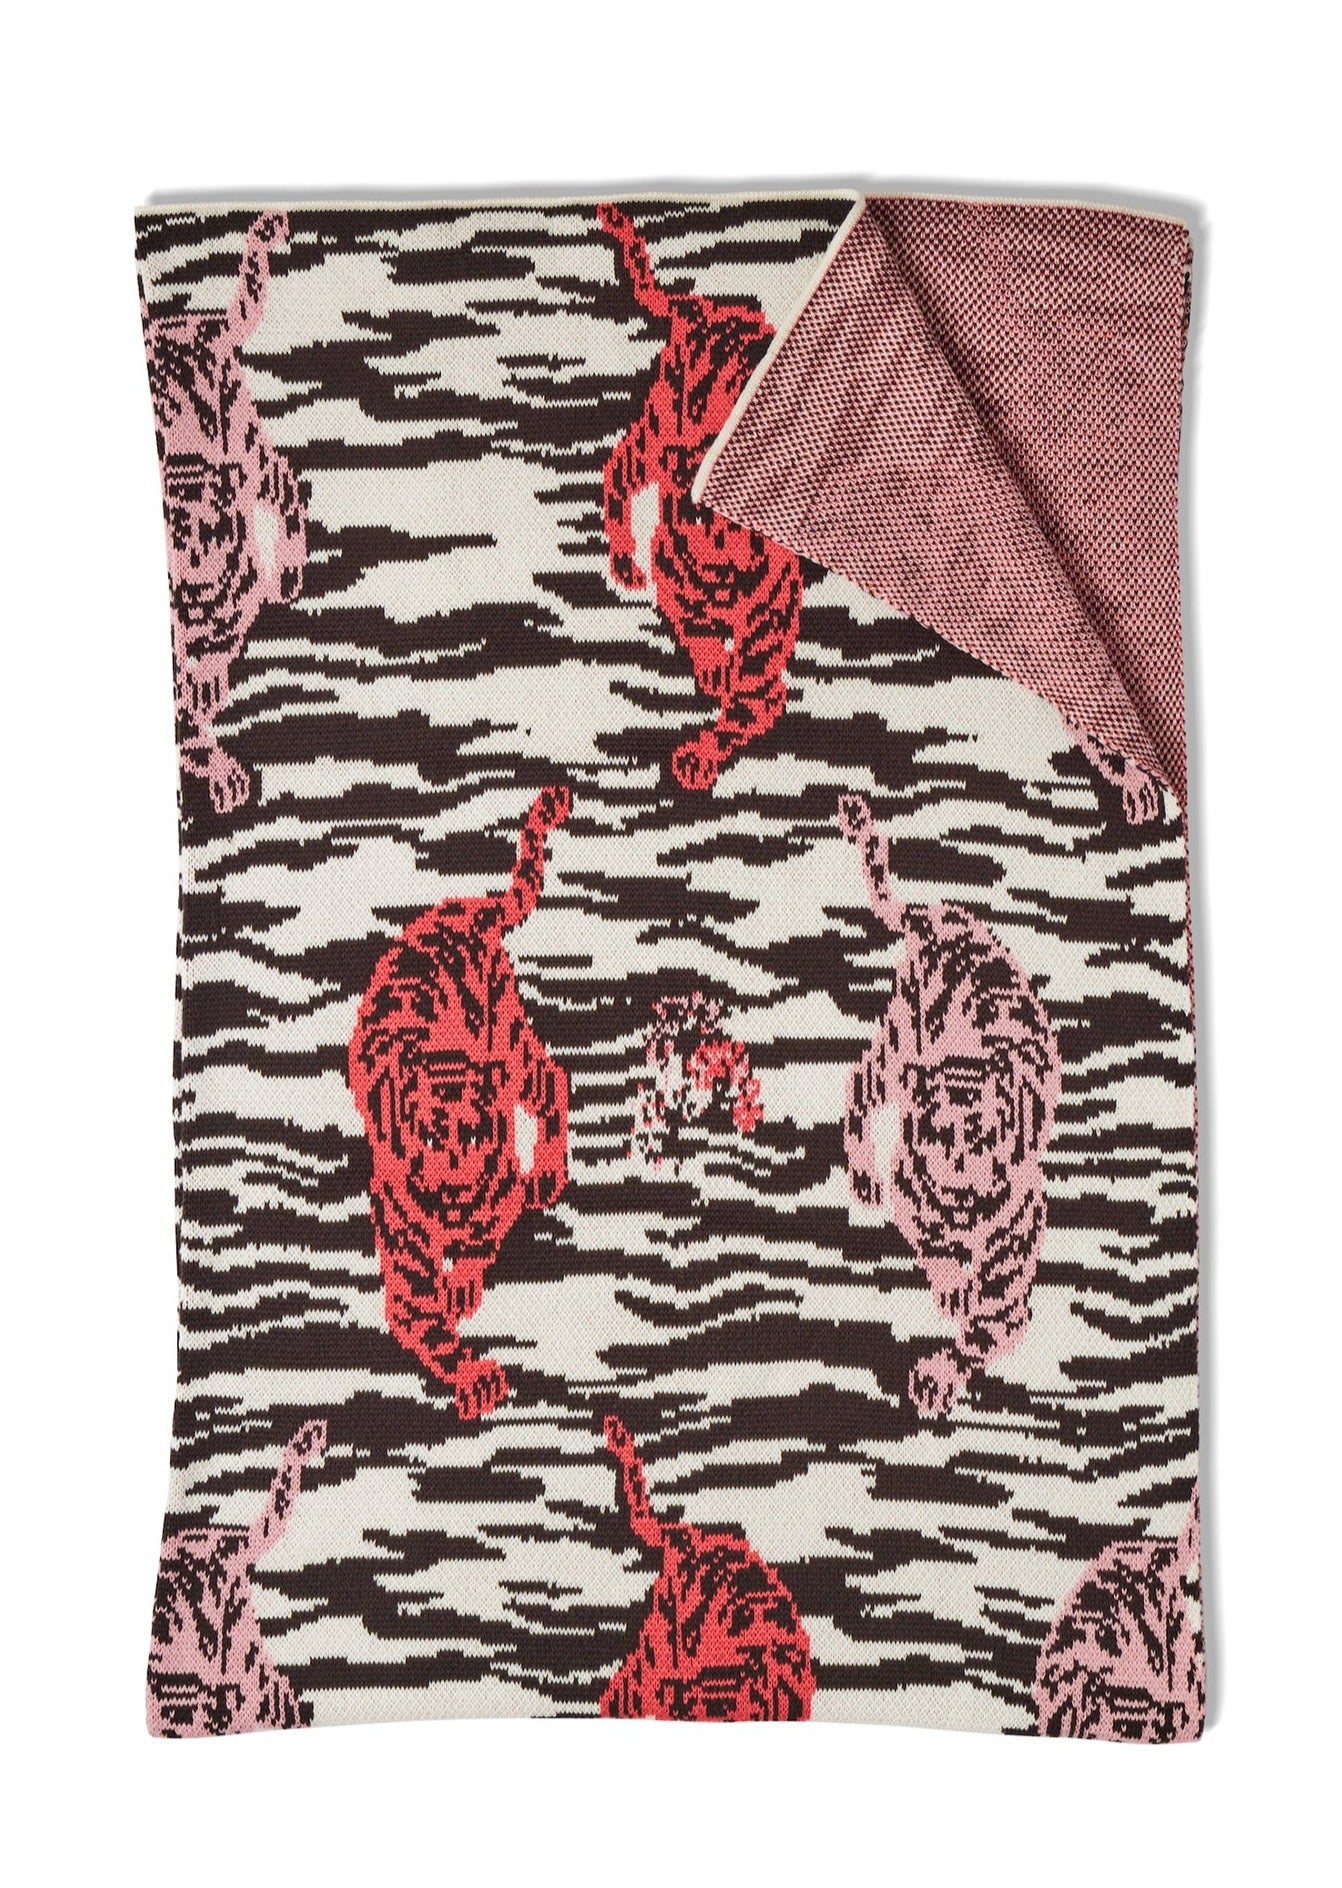 Tiger Printed Knit Blanket